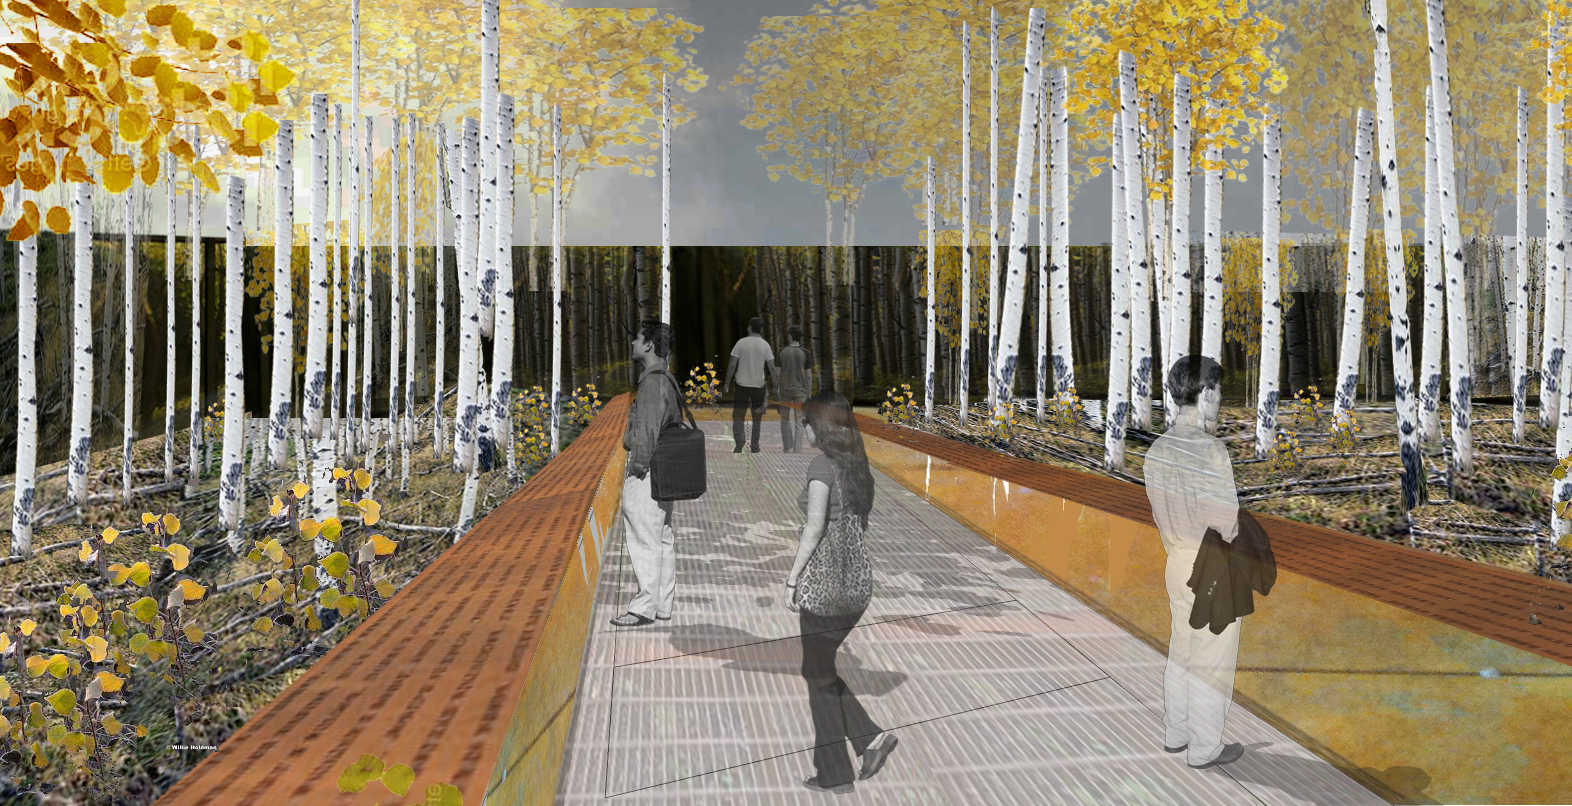 A digital illustration of a park